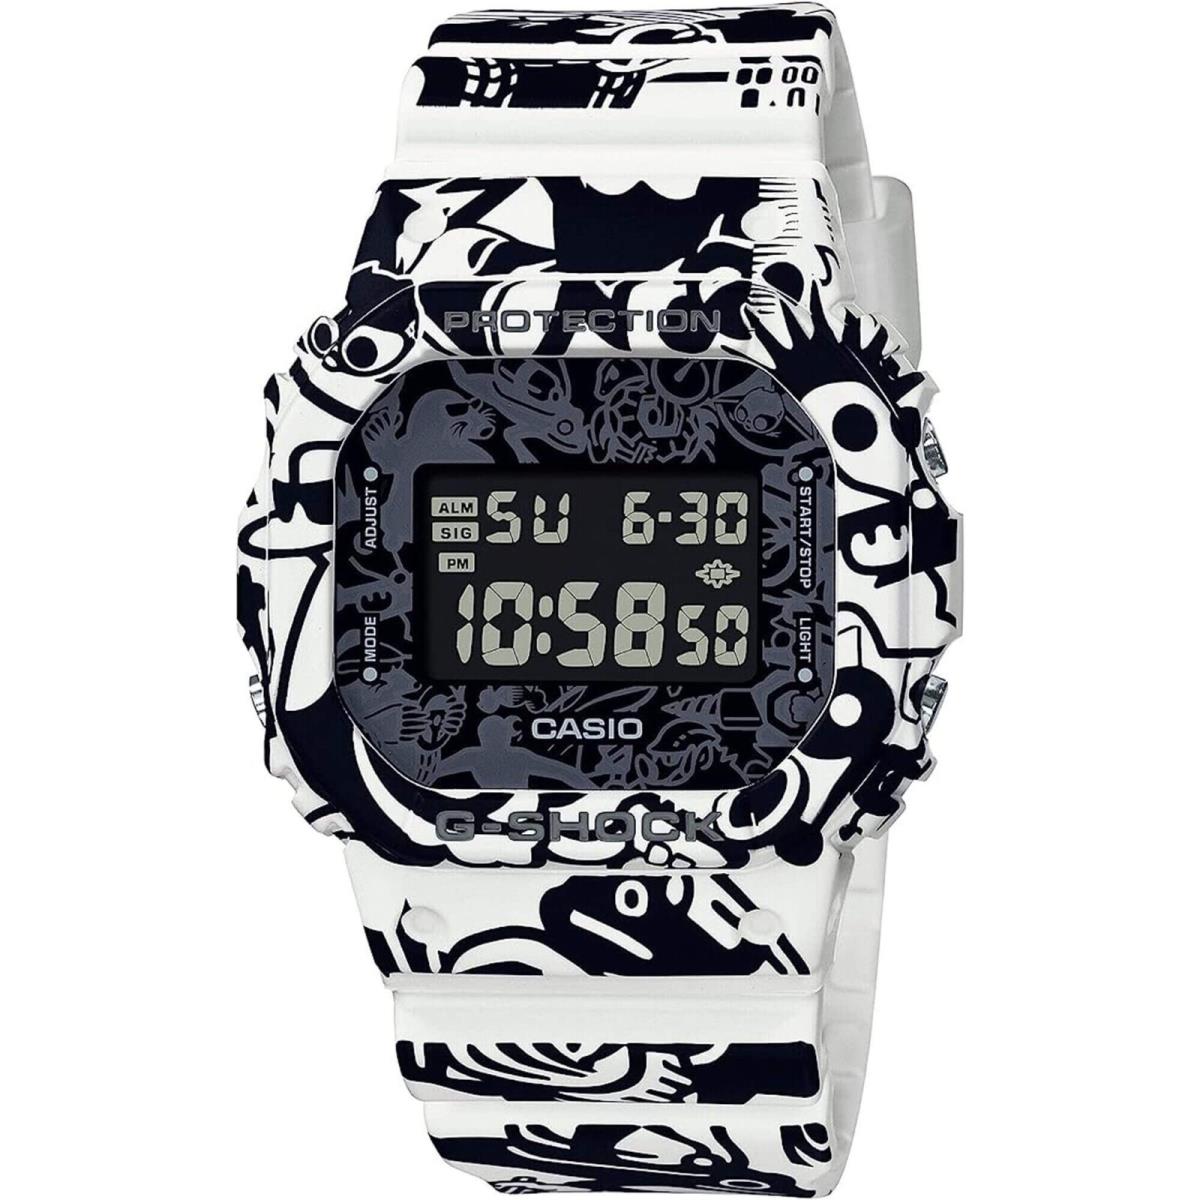 Casio Men`s Digital Watch G-shock G-universe Black and White Strap DW-5600GU-7CR